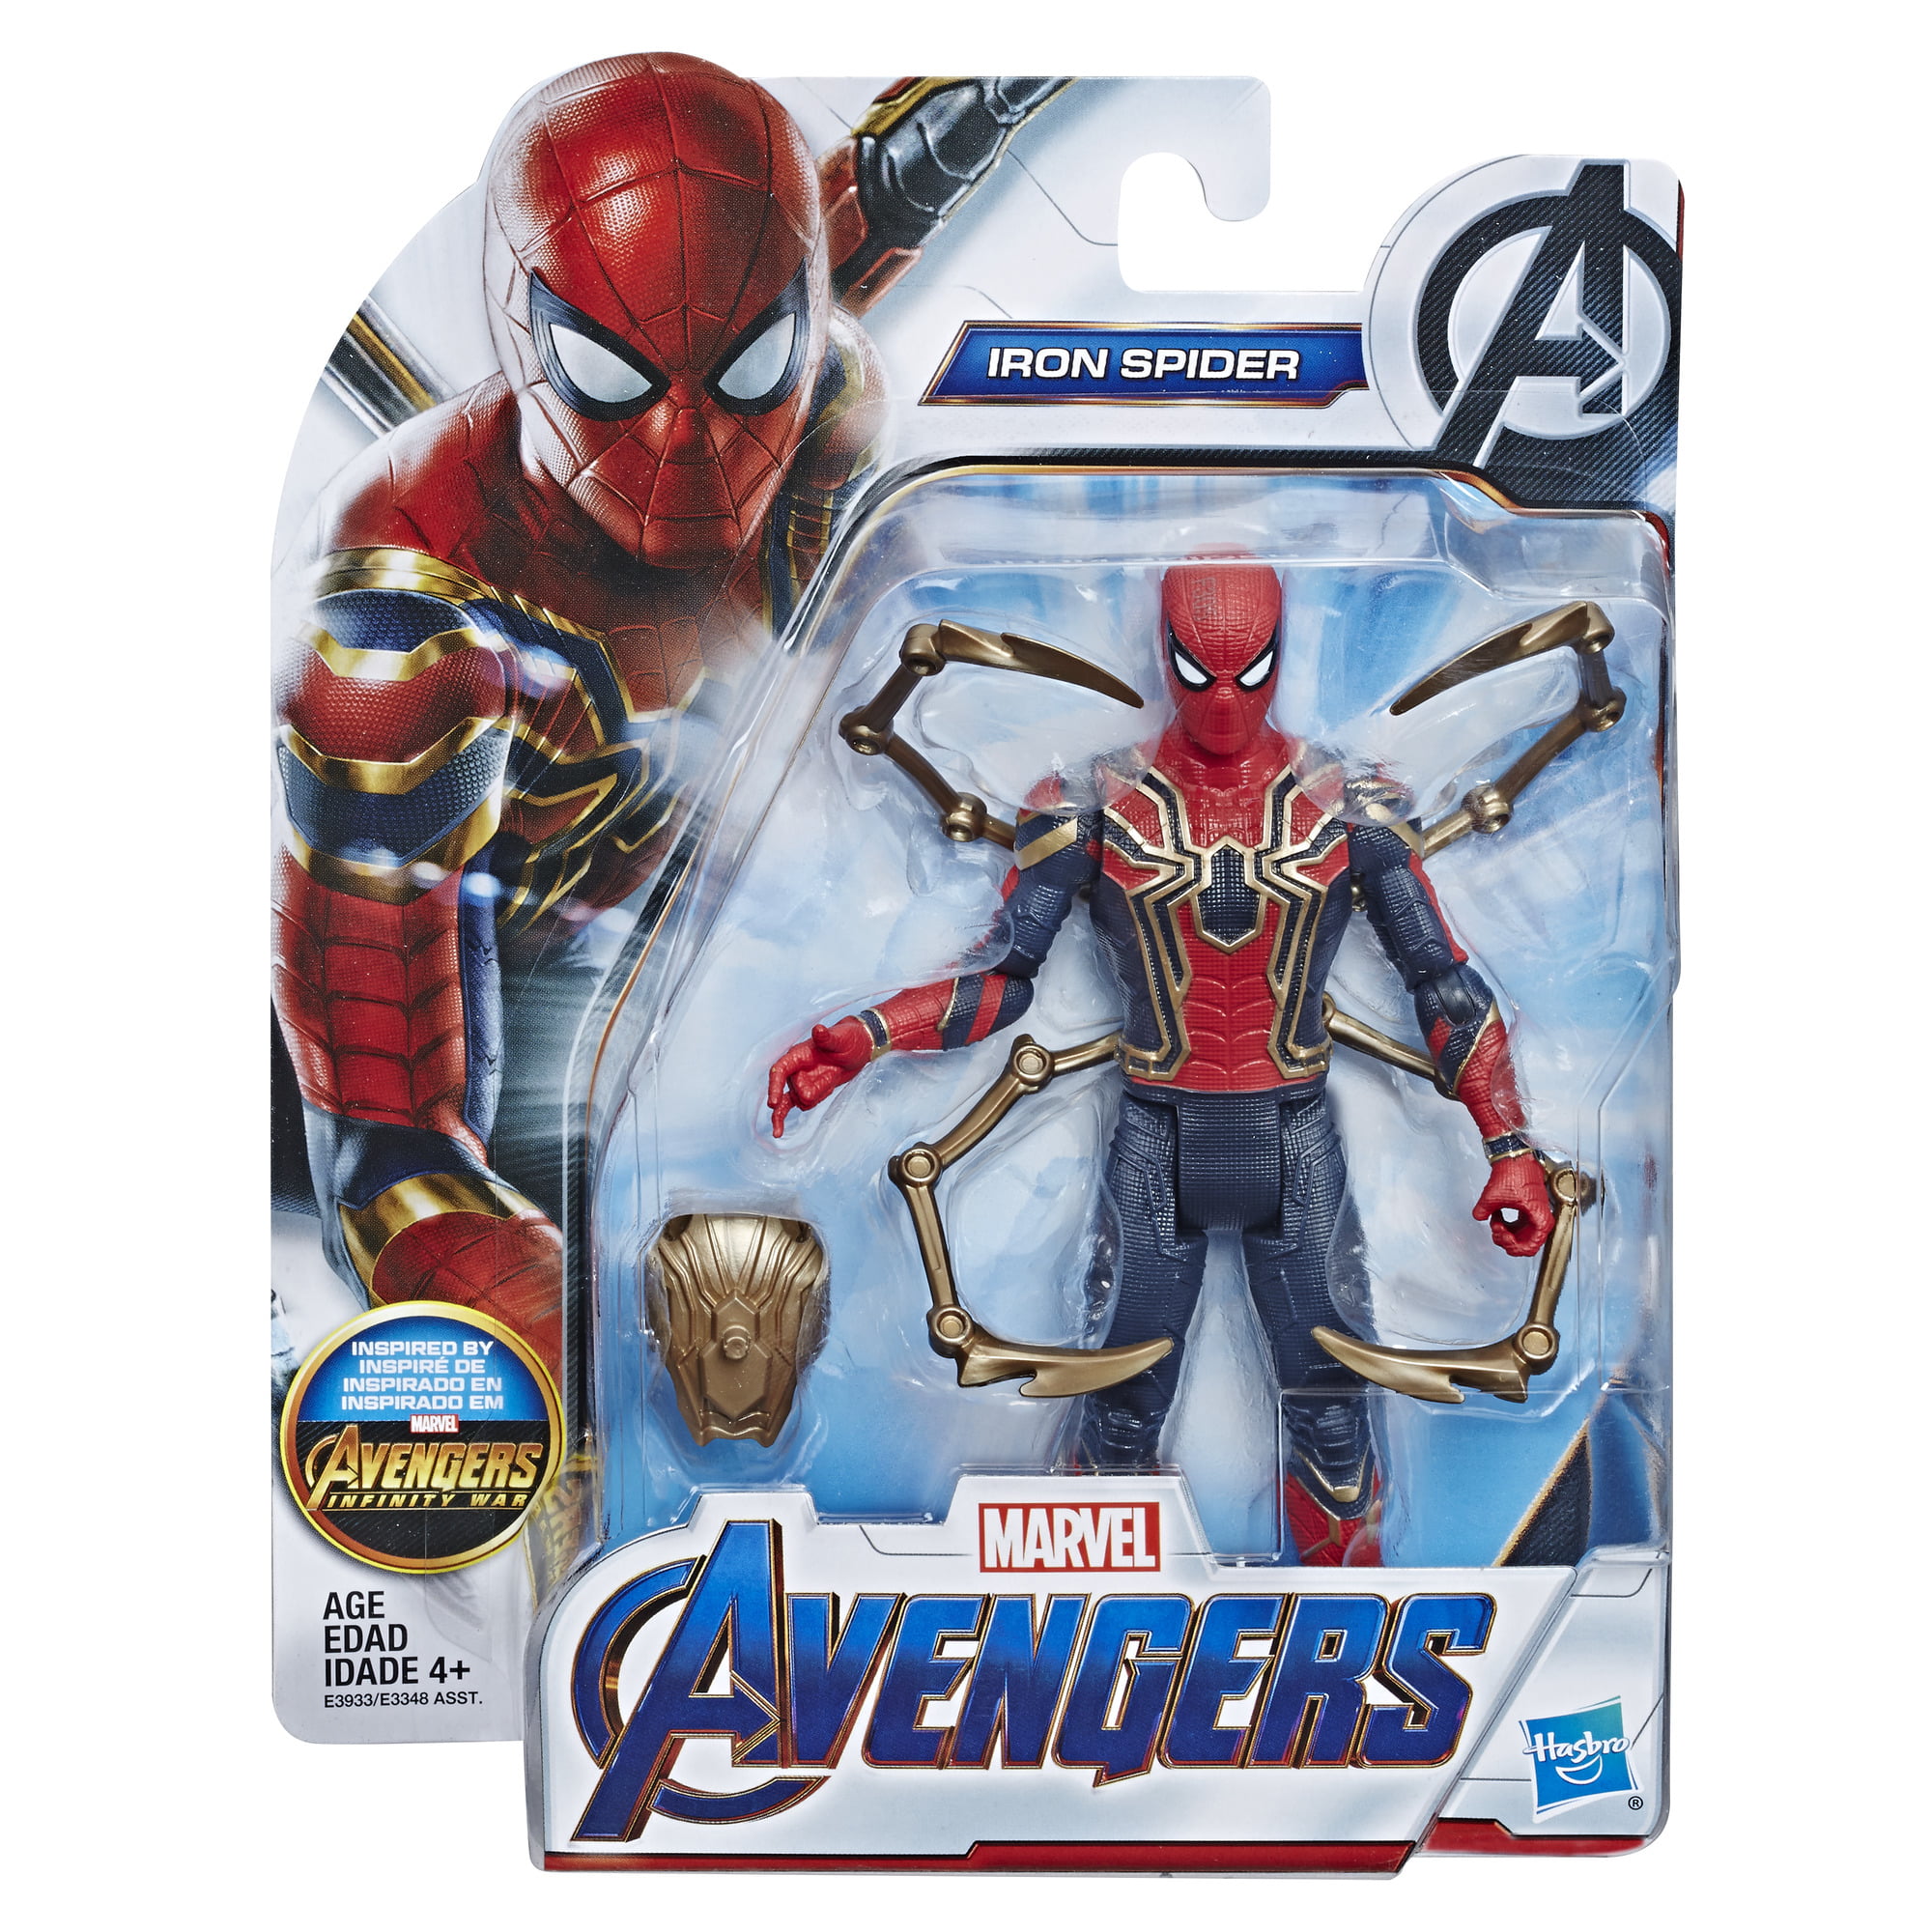 Avengers Endgame Infinity War Iron Spider Man Spiderman Action Figure 6'' Toy 